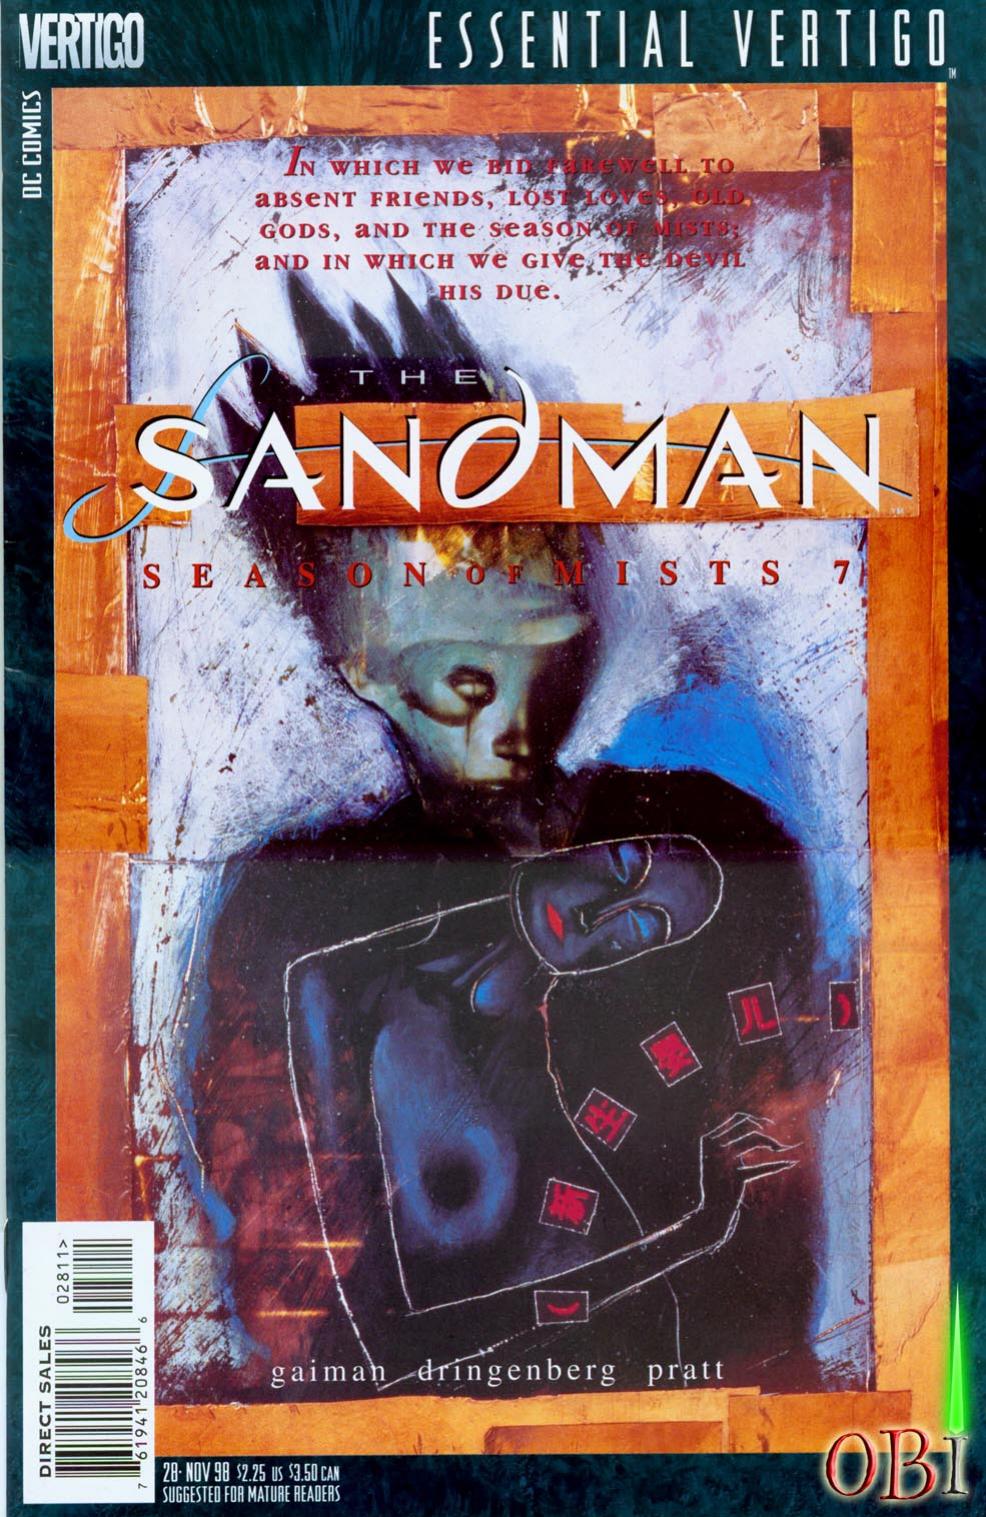 The Sandman #28 Season of Mists Epilogue